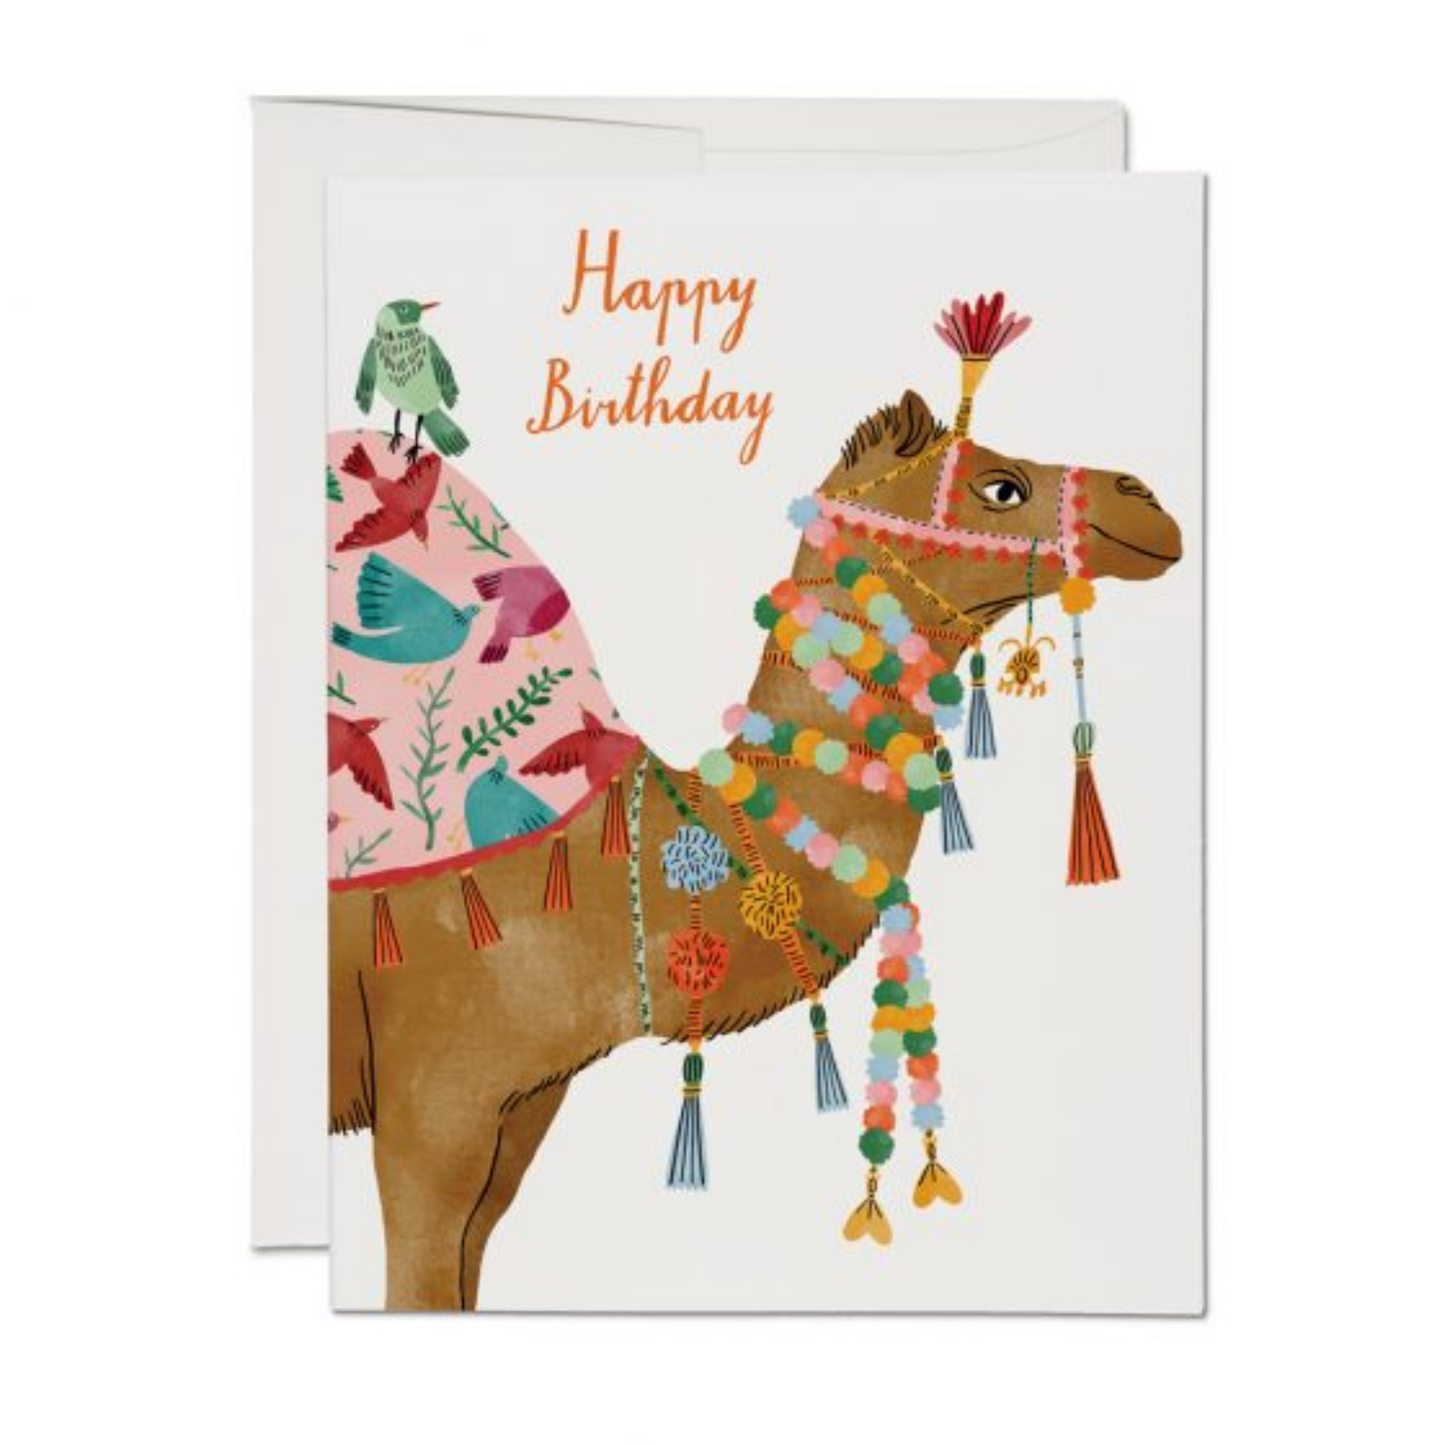 Camel Birthday Card